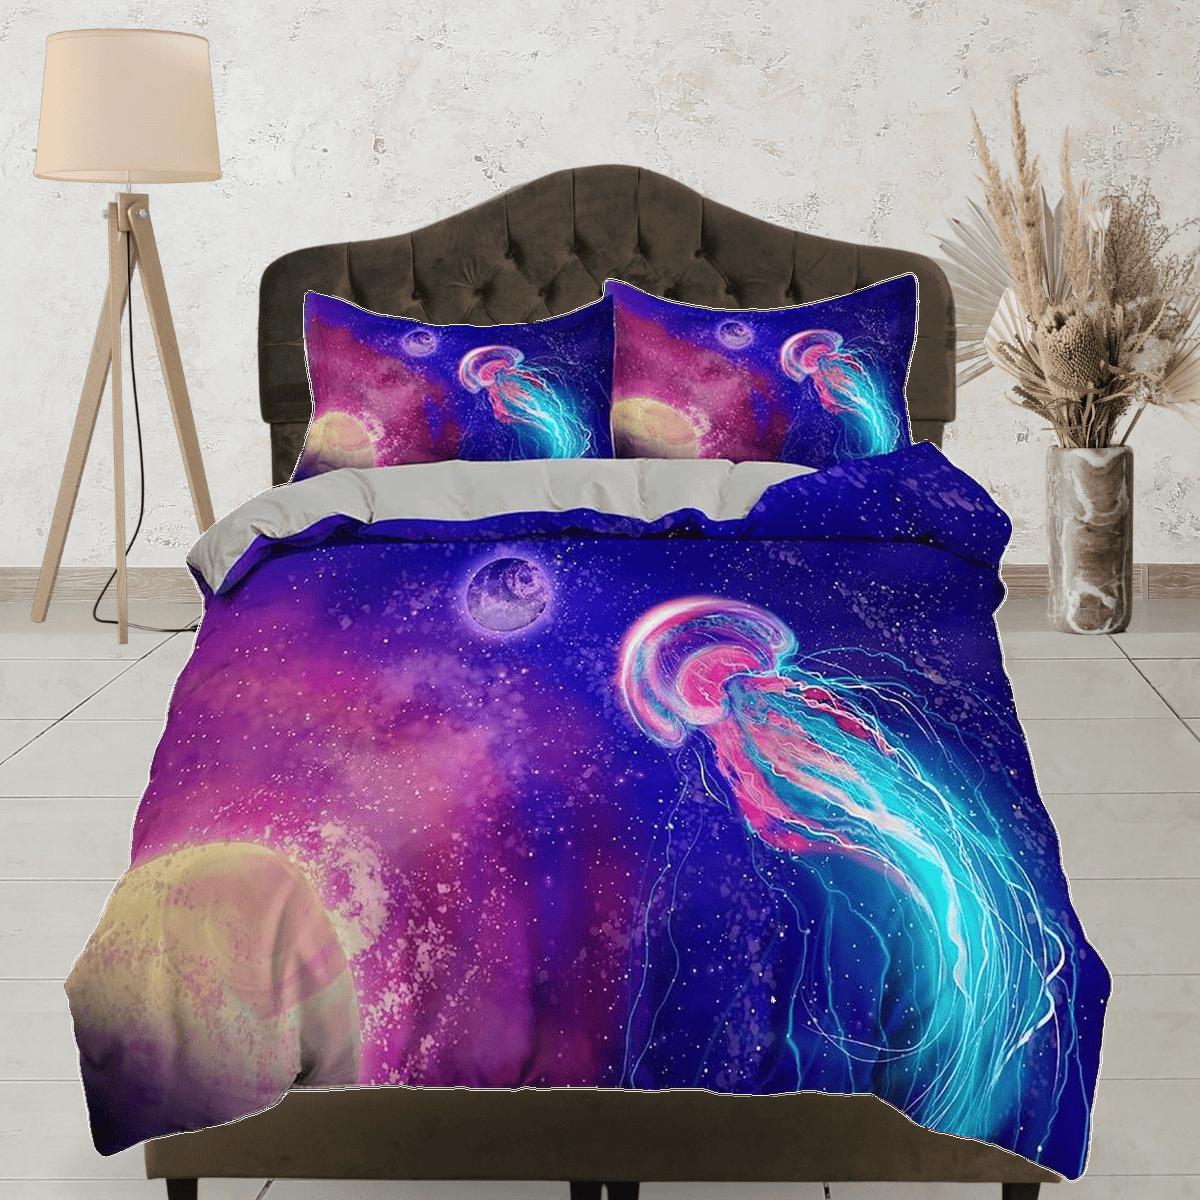 daintyduvet Galaxy jellyfish bedding colorful duvet cover, ocean blush sea animal bedding set full king queen twin crib toddler, dorm bedding gift